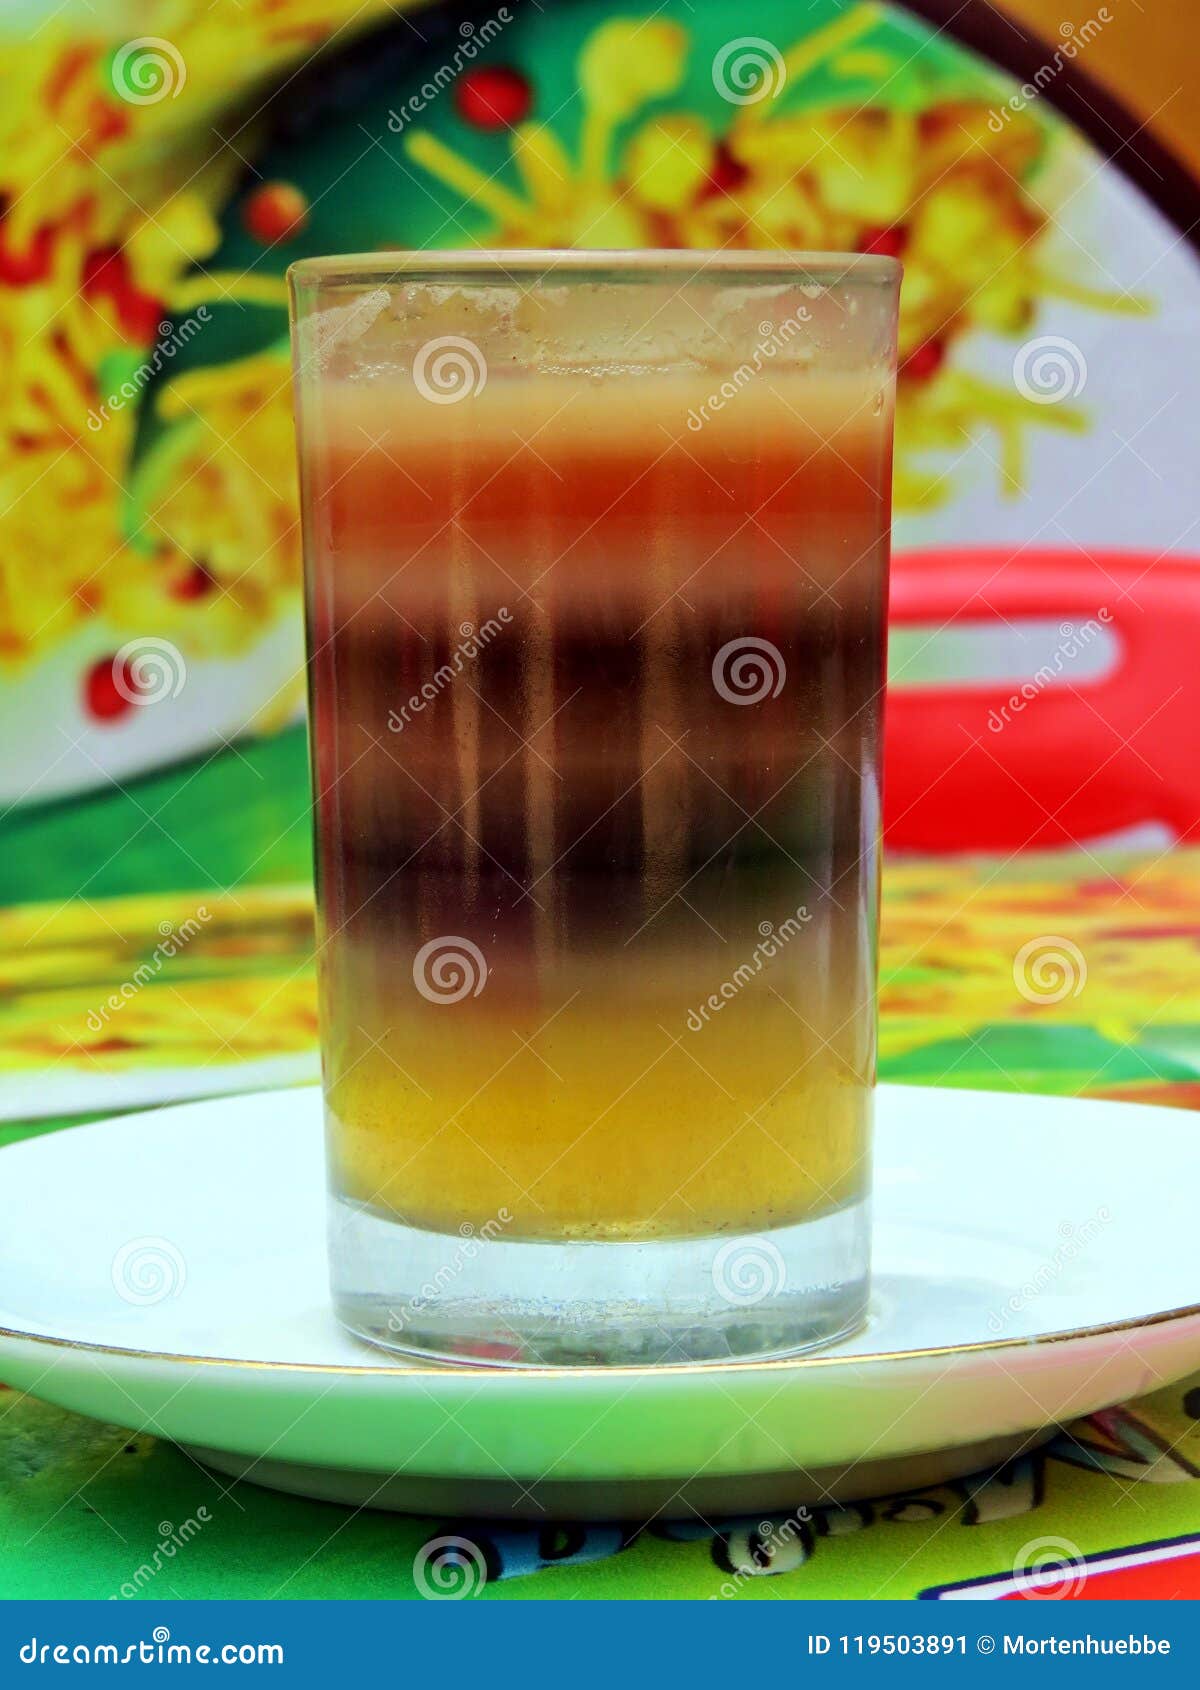 7 layer tea, signature drink in srimangal, bangladesh